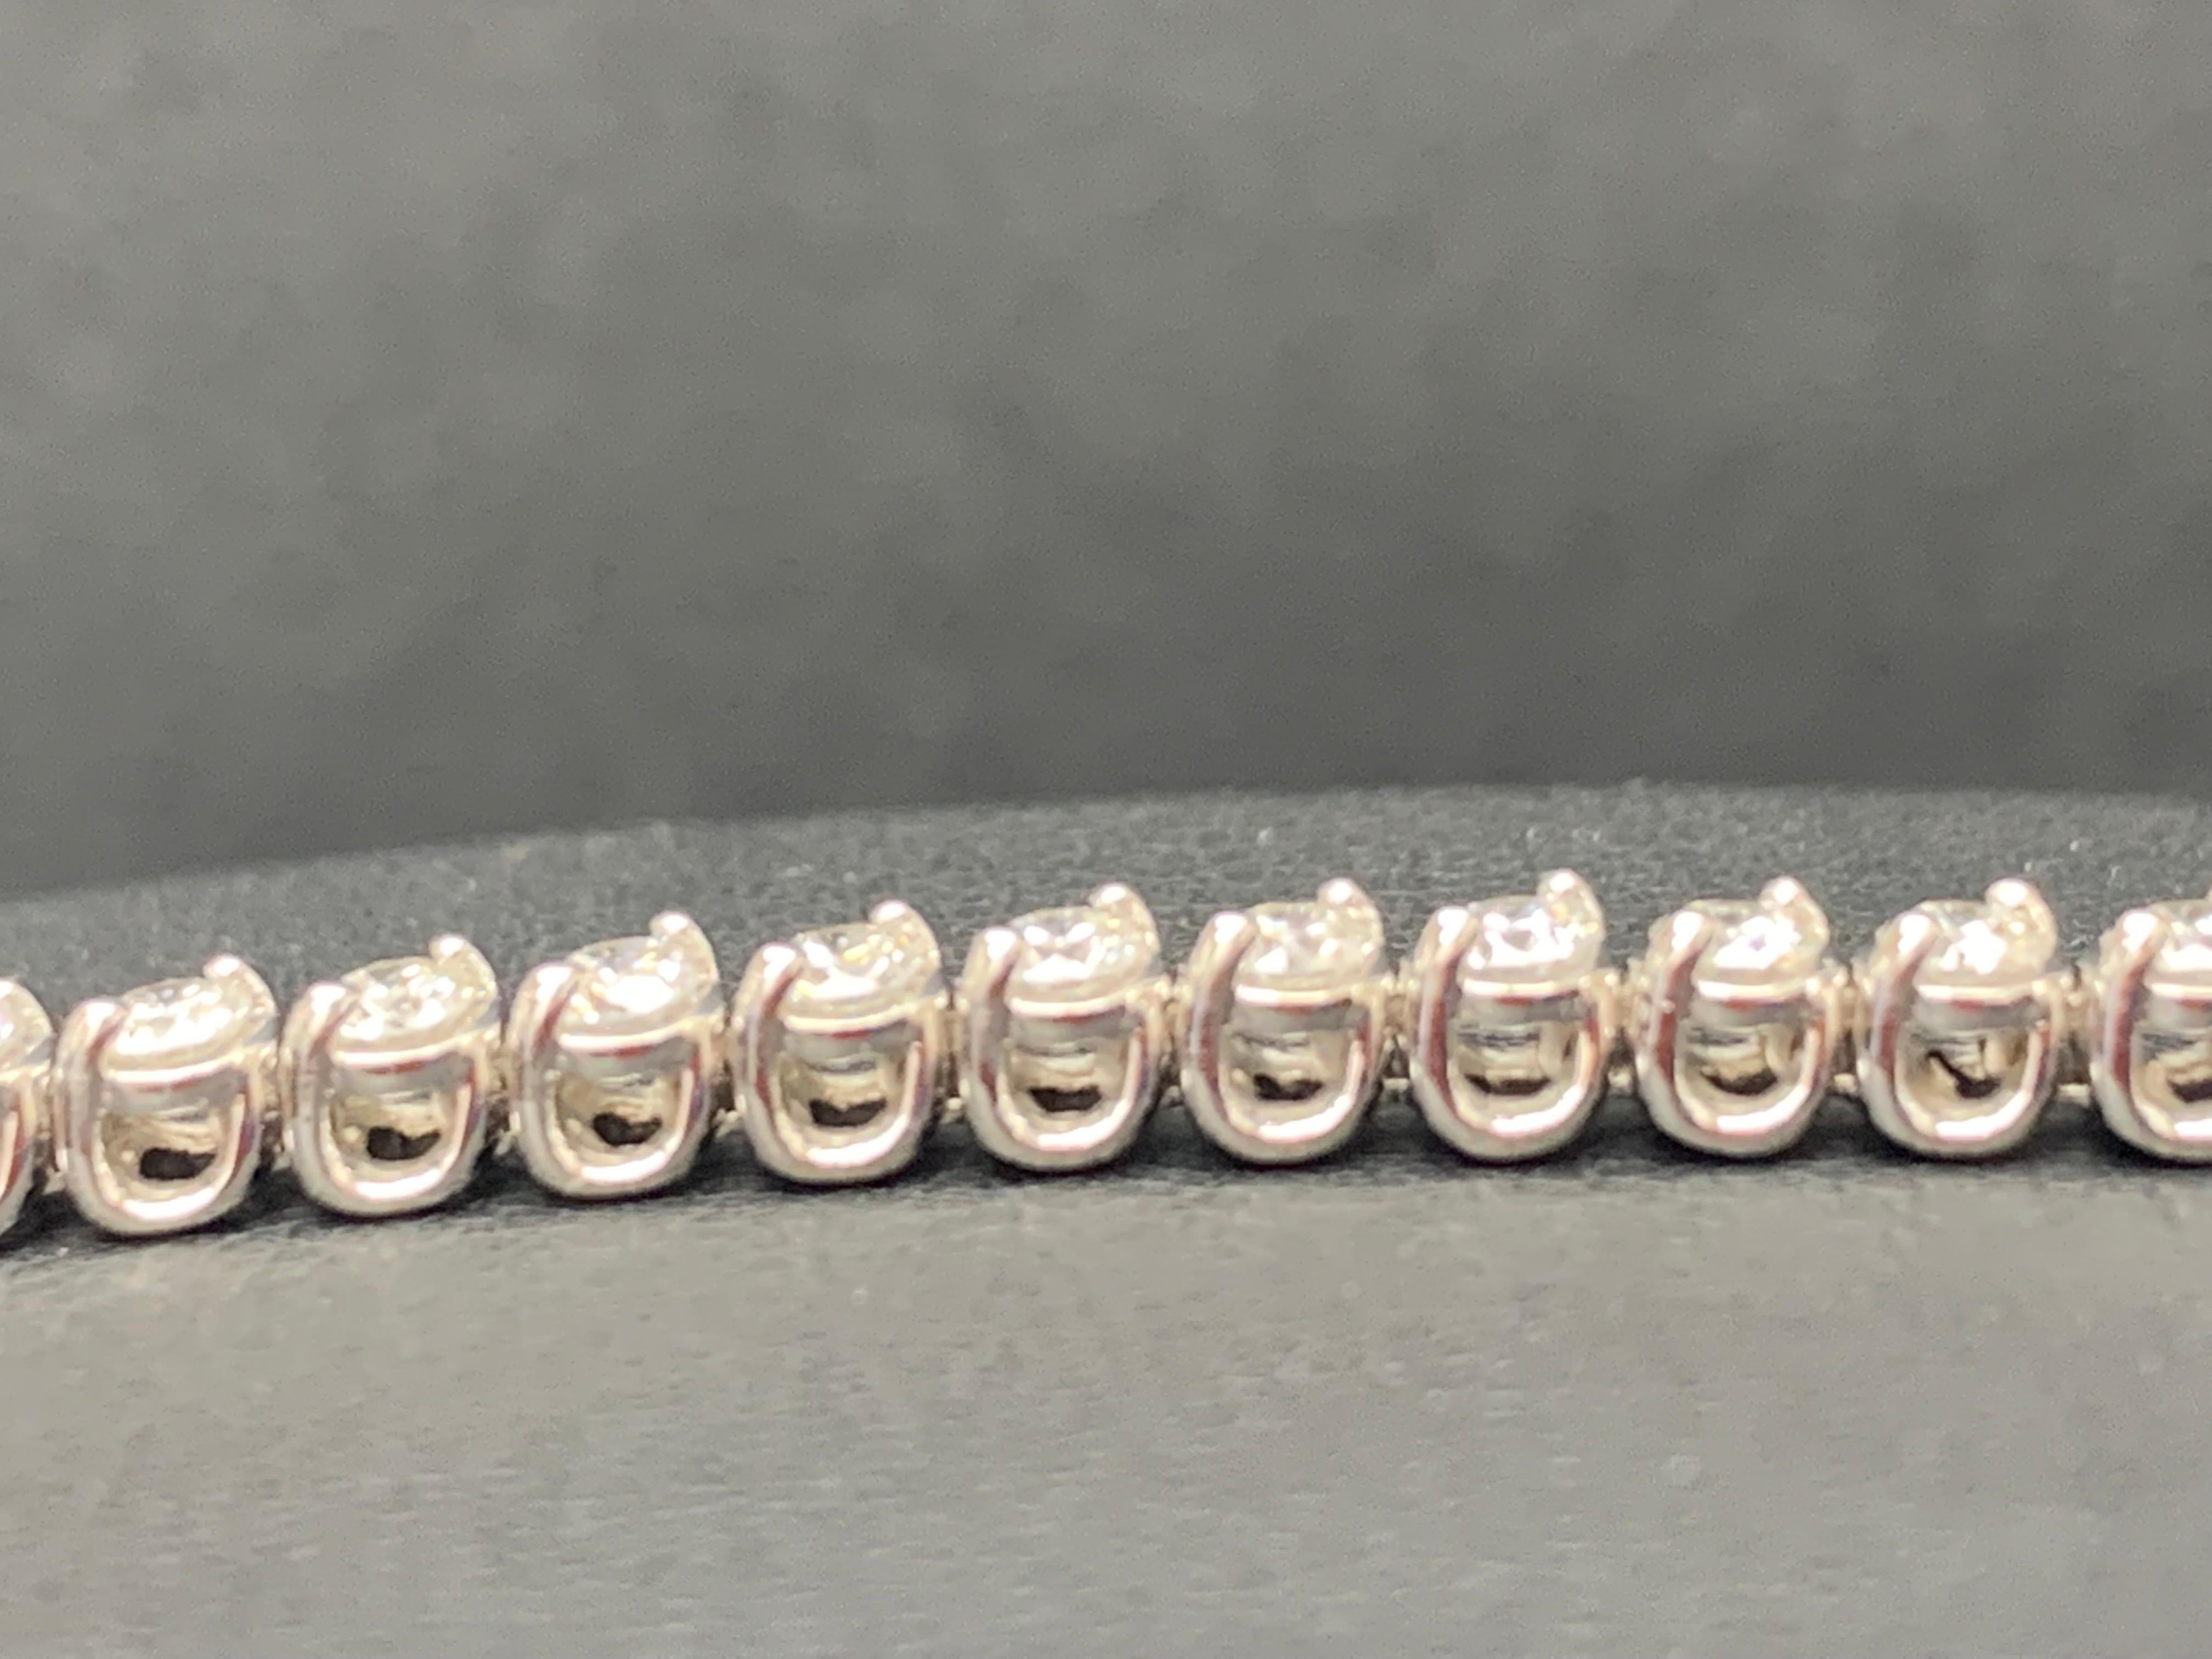 2.92 Carat Round Cut Diamond Tennis Bracelet in 14K White Gold For Sale 1